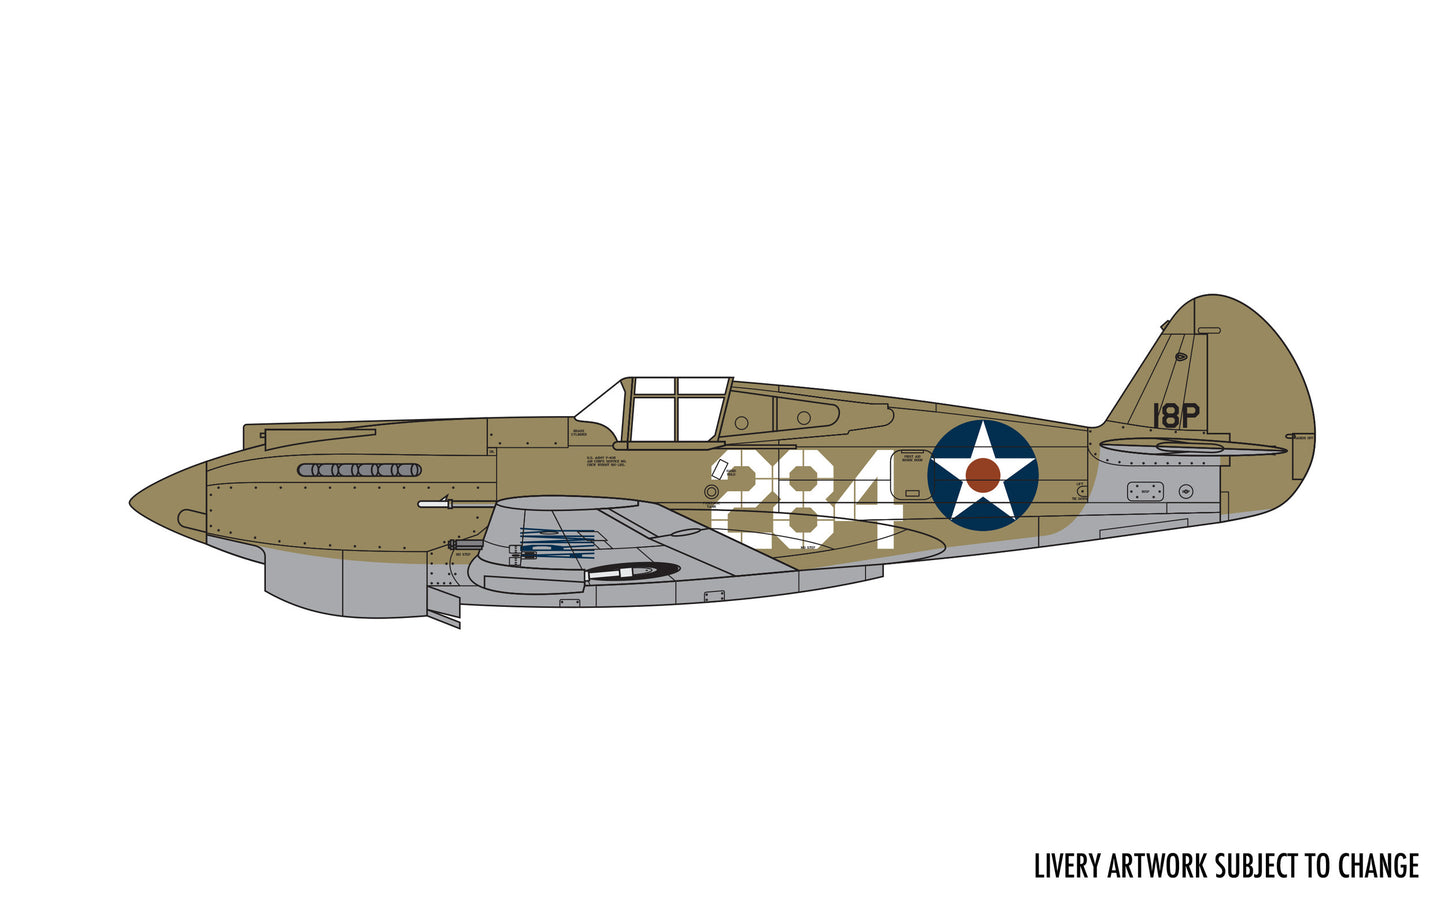 Airfix 1/72nd Scale Curtiss P-40B Warhawk